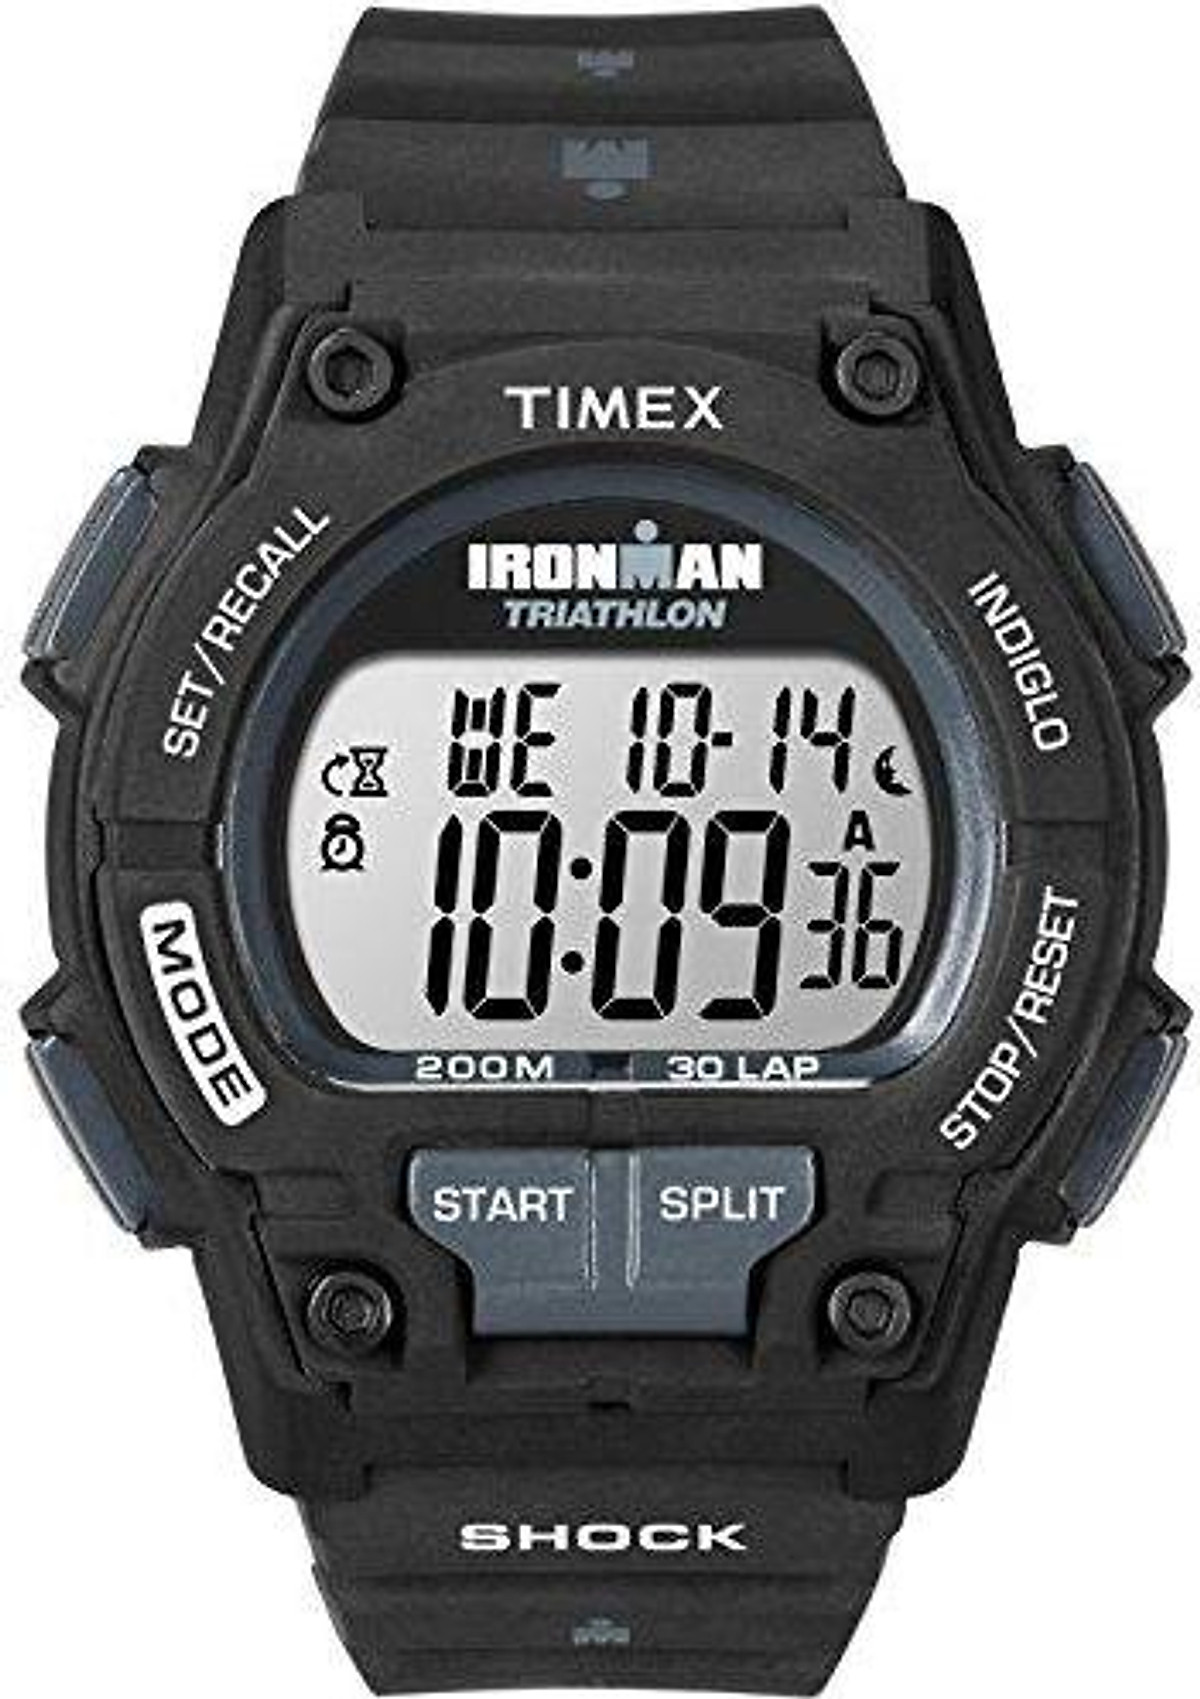 Mua Timex Full-Size Ironman Endure 30 Shock Watch - Black tại Global Ecom